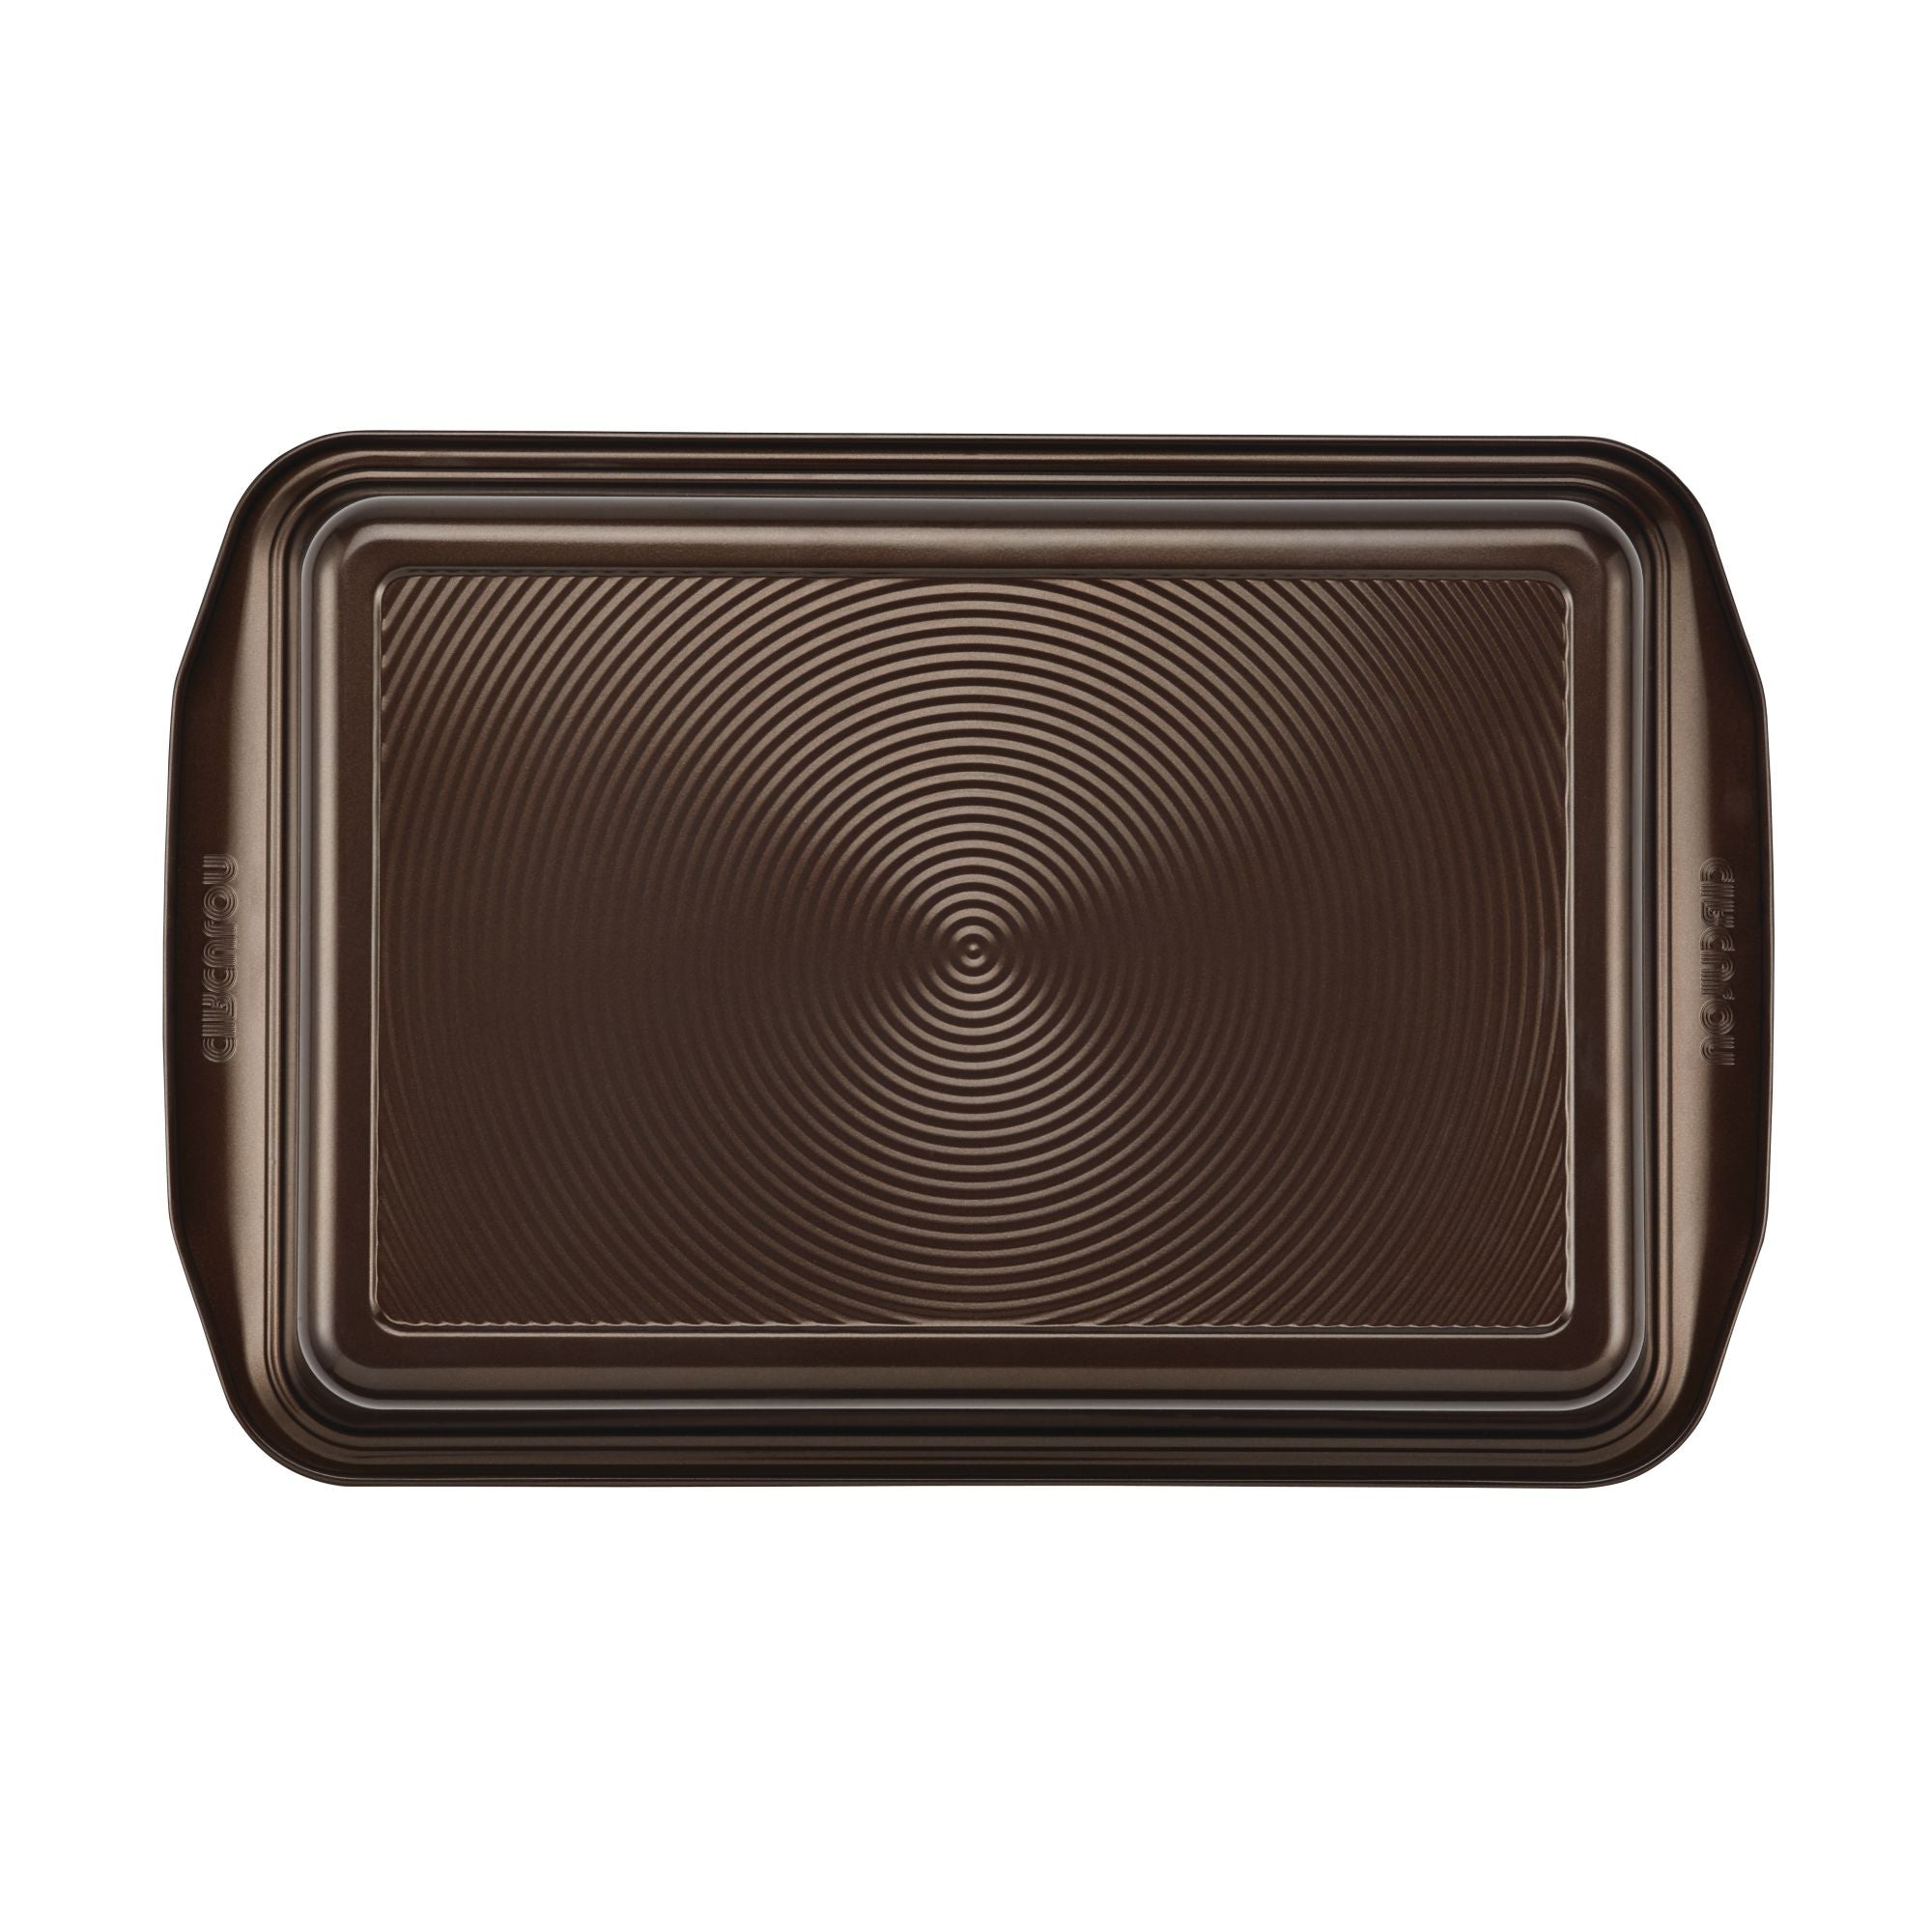 Circulon Nonstick Bakeware Chocolate Brown 9 x 13-inch Rectangular Cake Pan